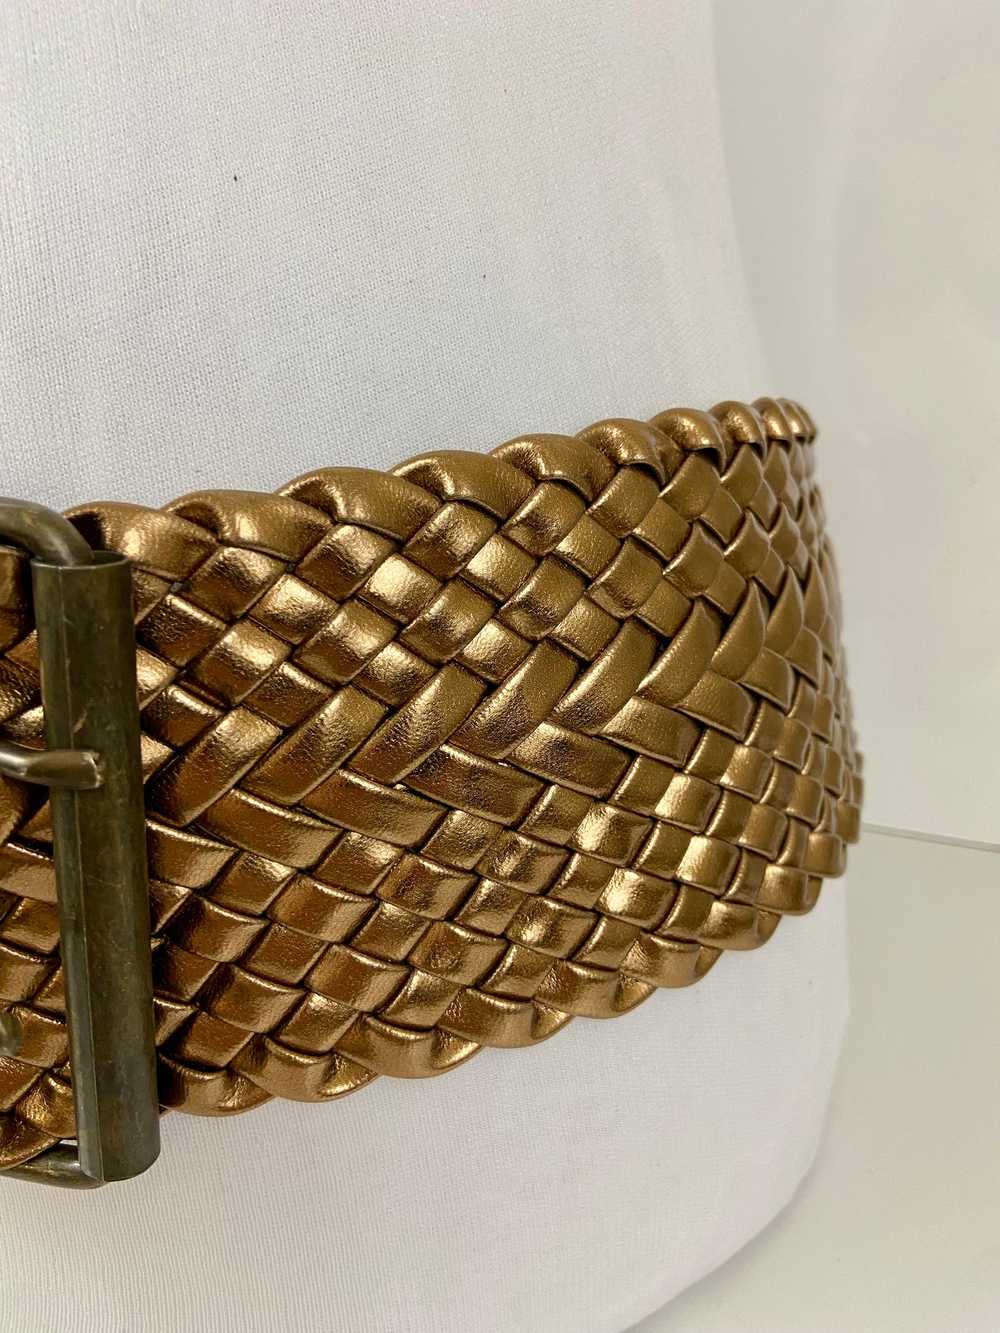 80's Vintage Woven Metallic Gold Braided
Belt - image 4